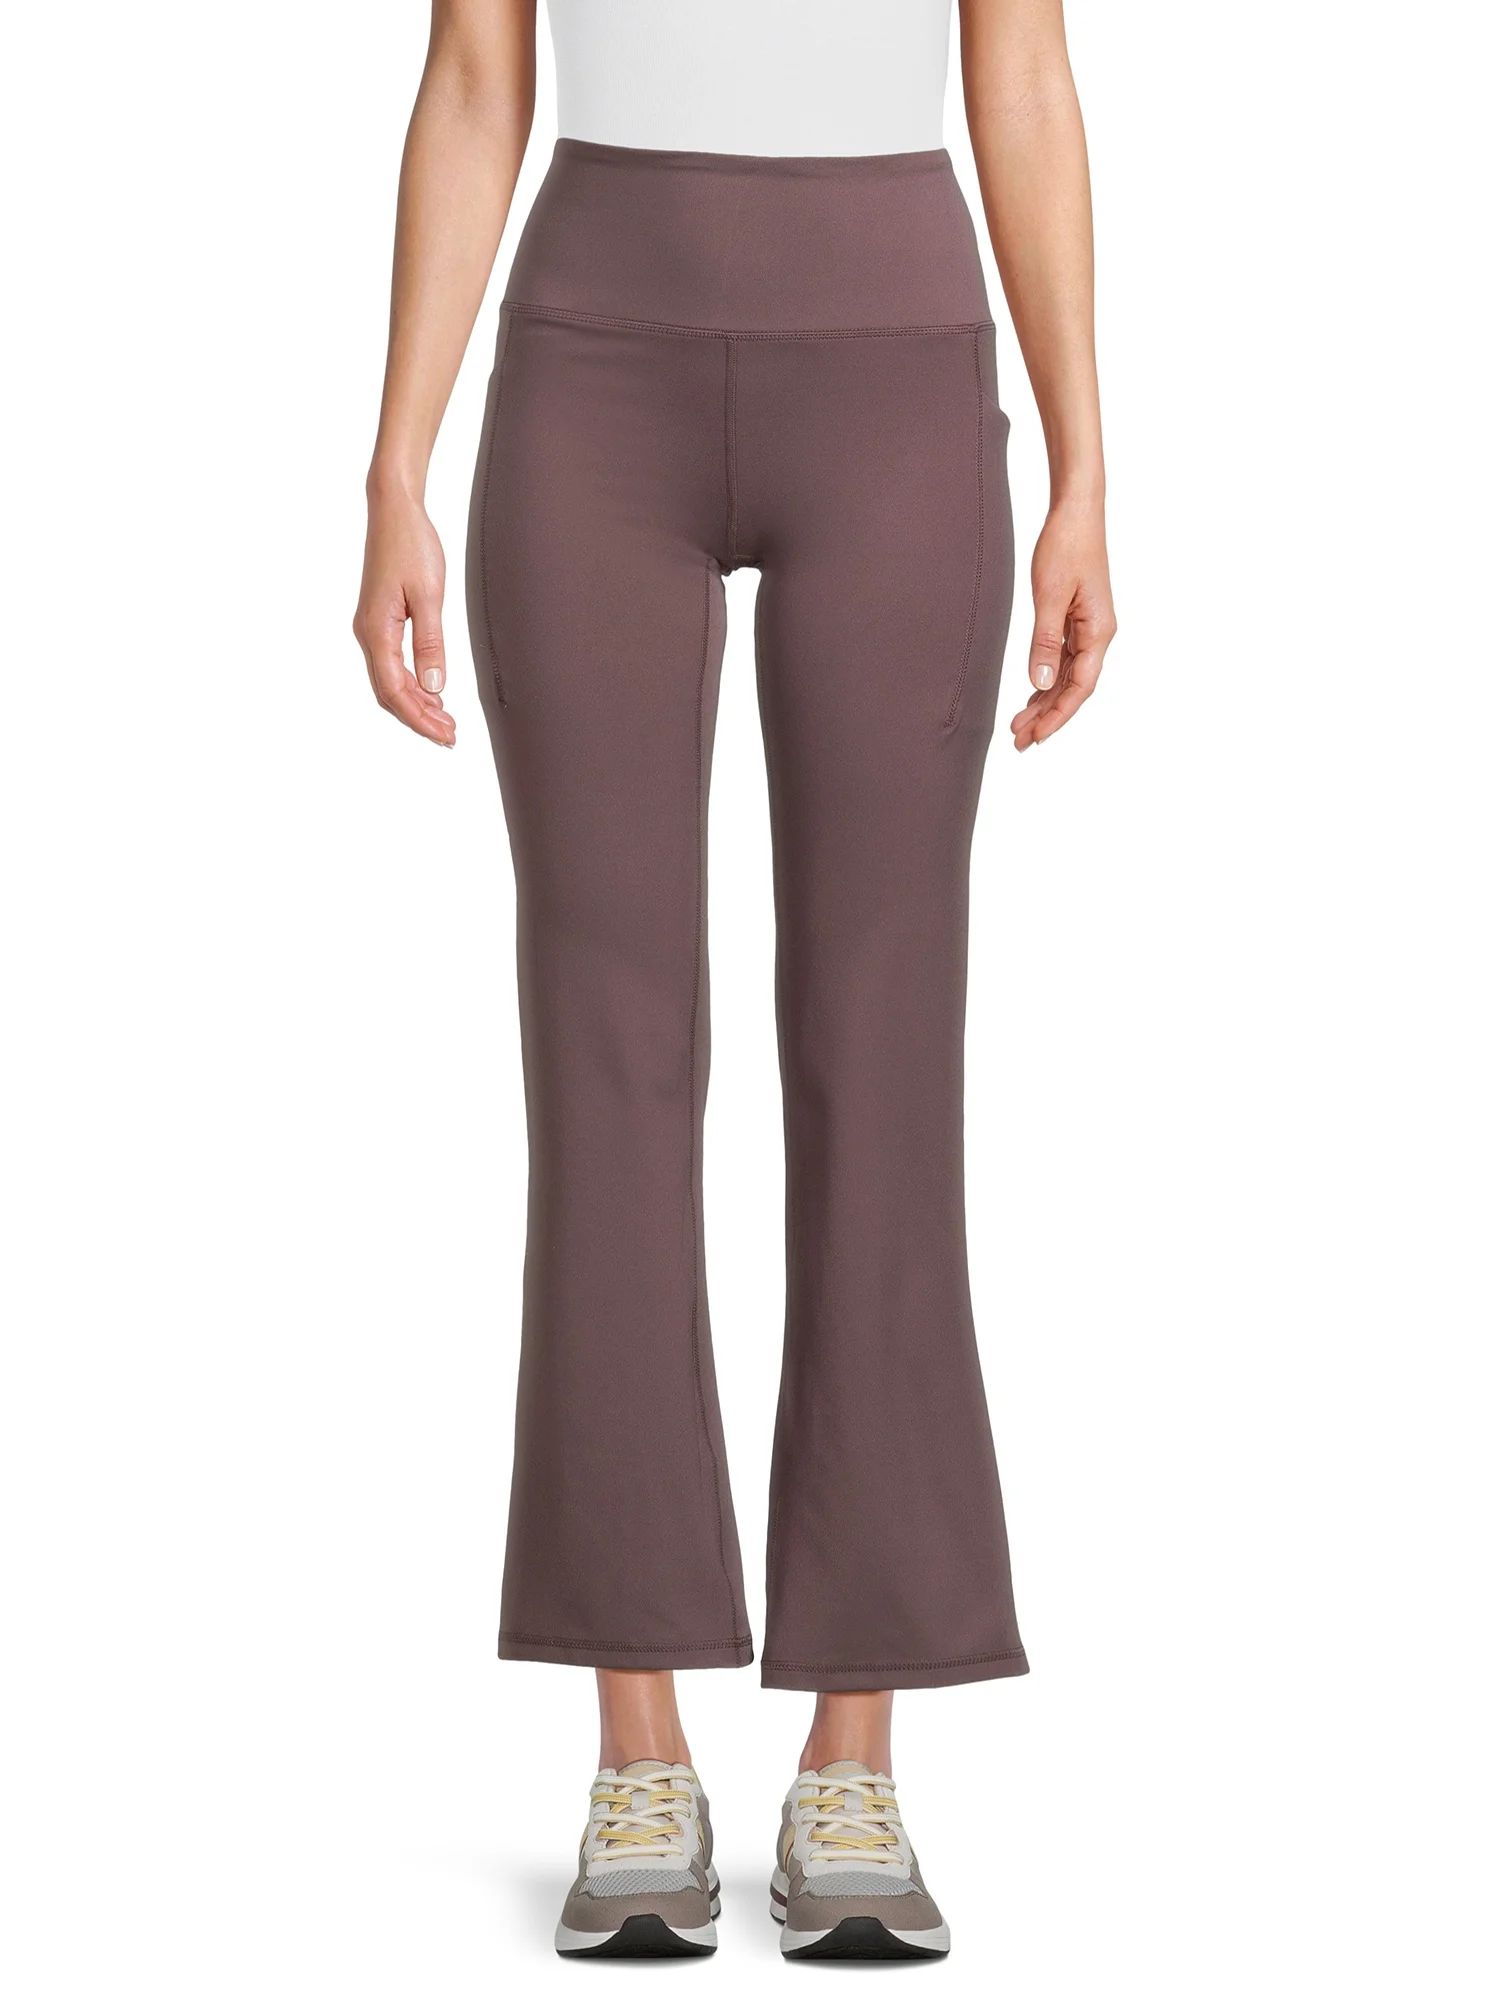 Avia Women's and Women's Plus Flare Leg Yoga Pant, Sizes XS-4X | Walmart (US)